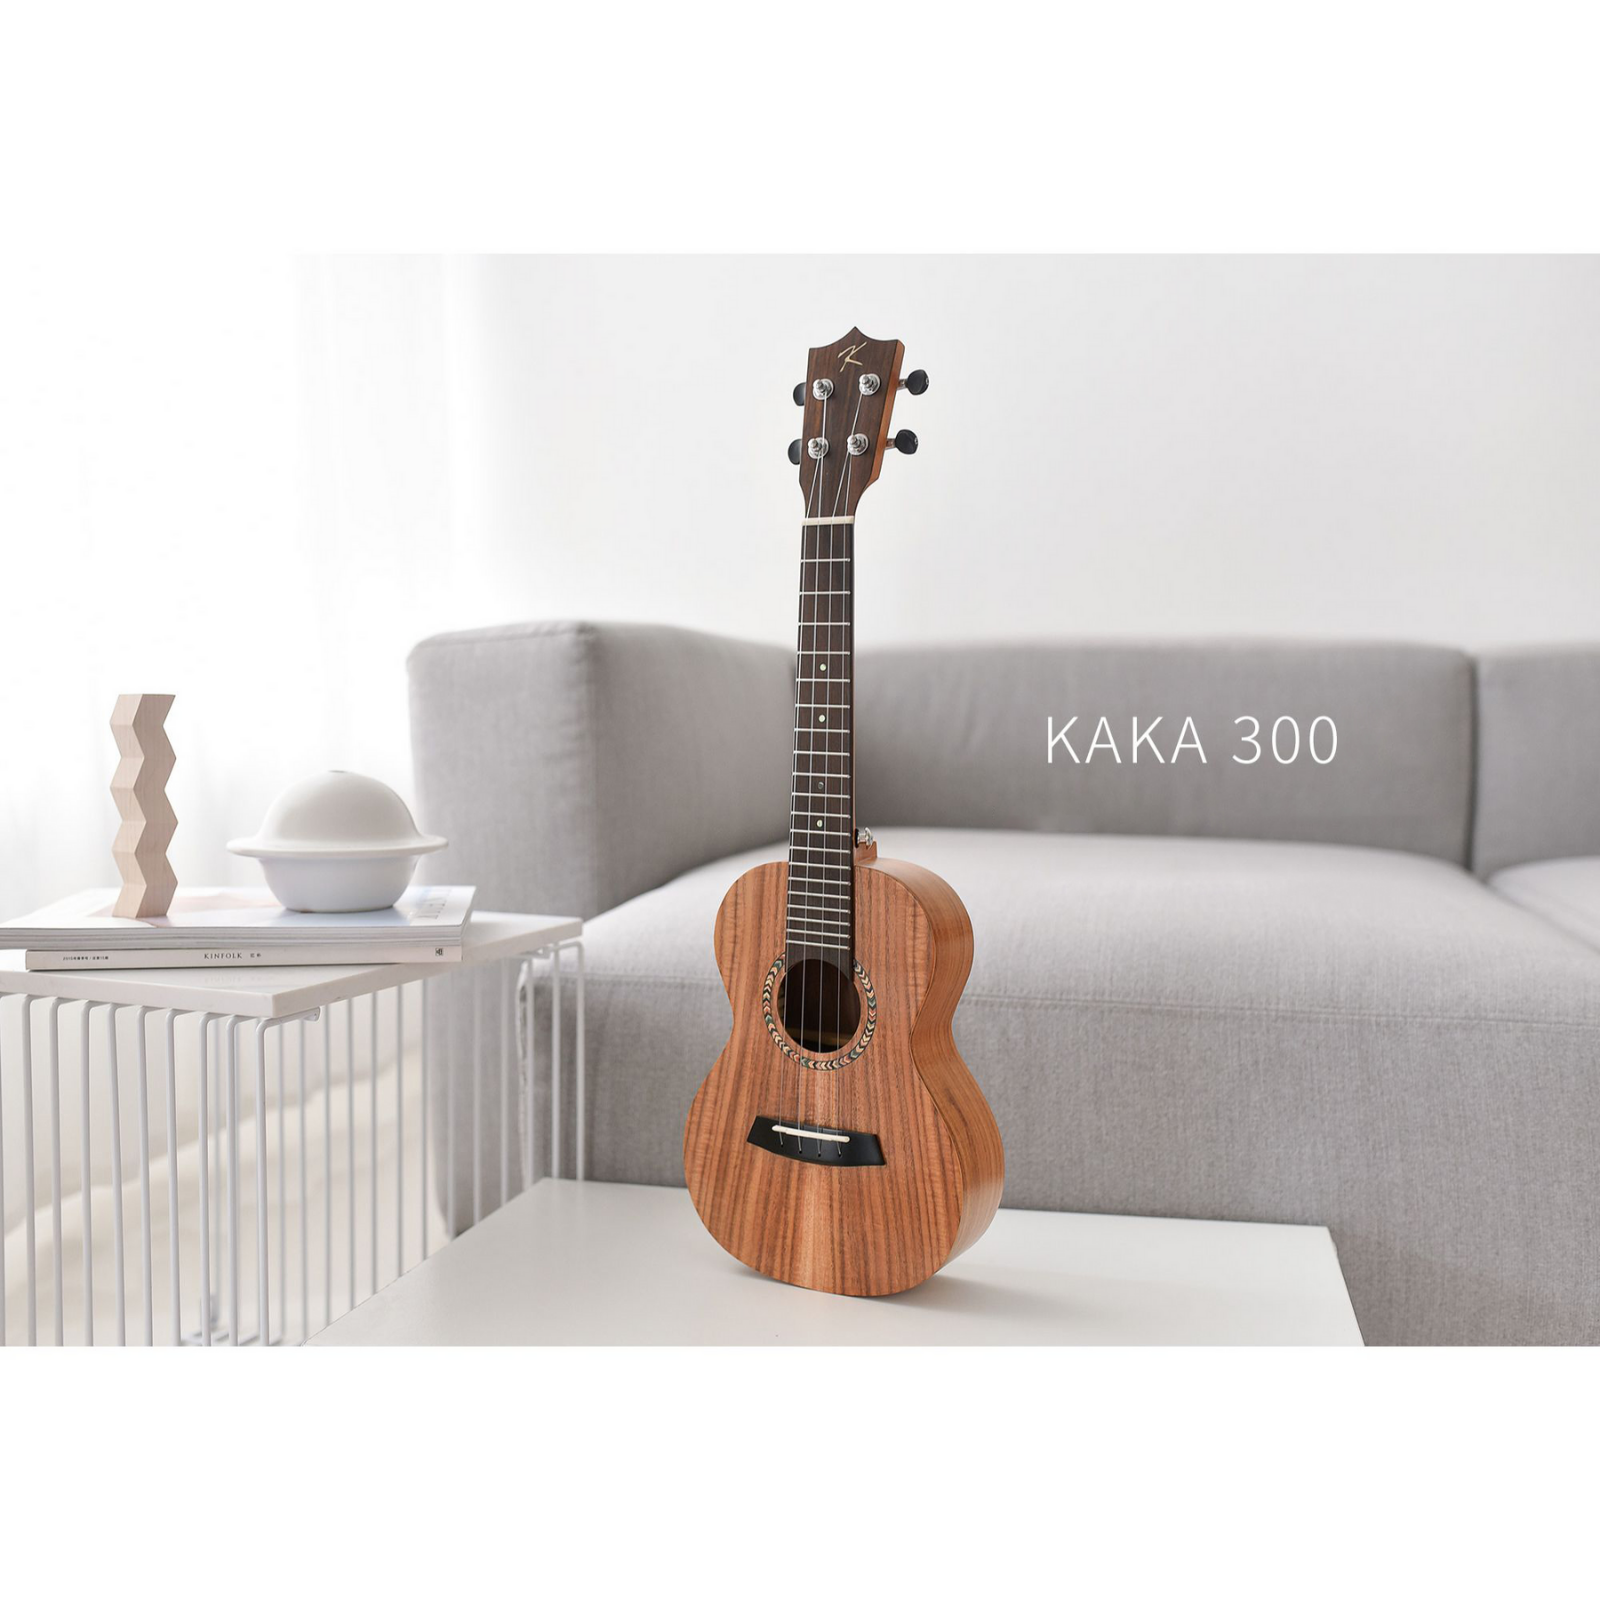 KAKA KUC300  23 INCH CONCERT SIZE UKULELE ASIAN LAMINATED KOA WITH BAG, KAKA, UKULELE, kaka-ukulele-kuc300, ZOSO MUSIC SDN BHD